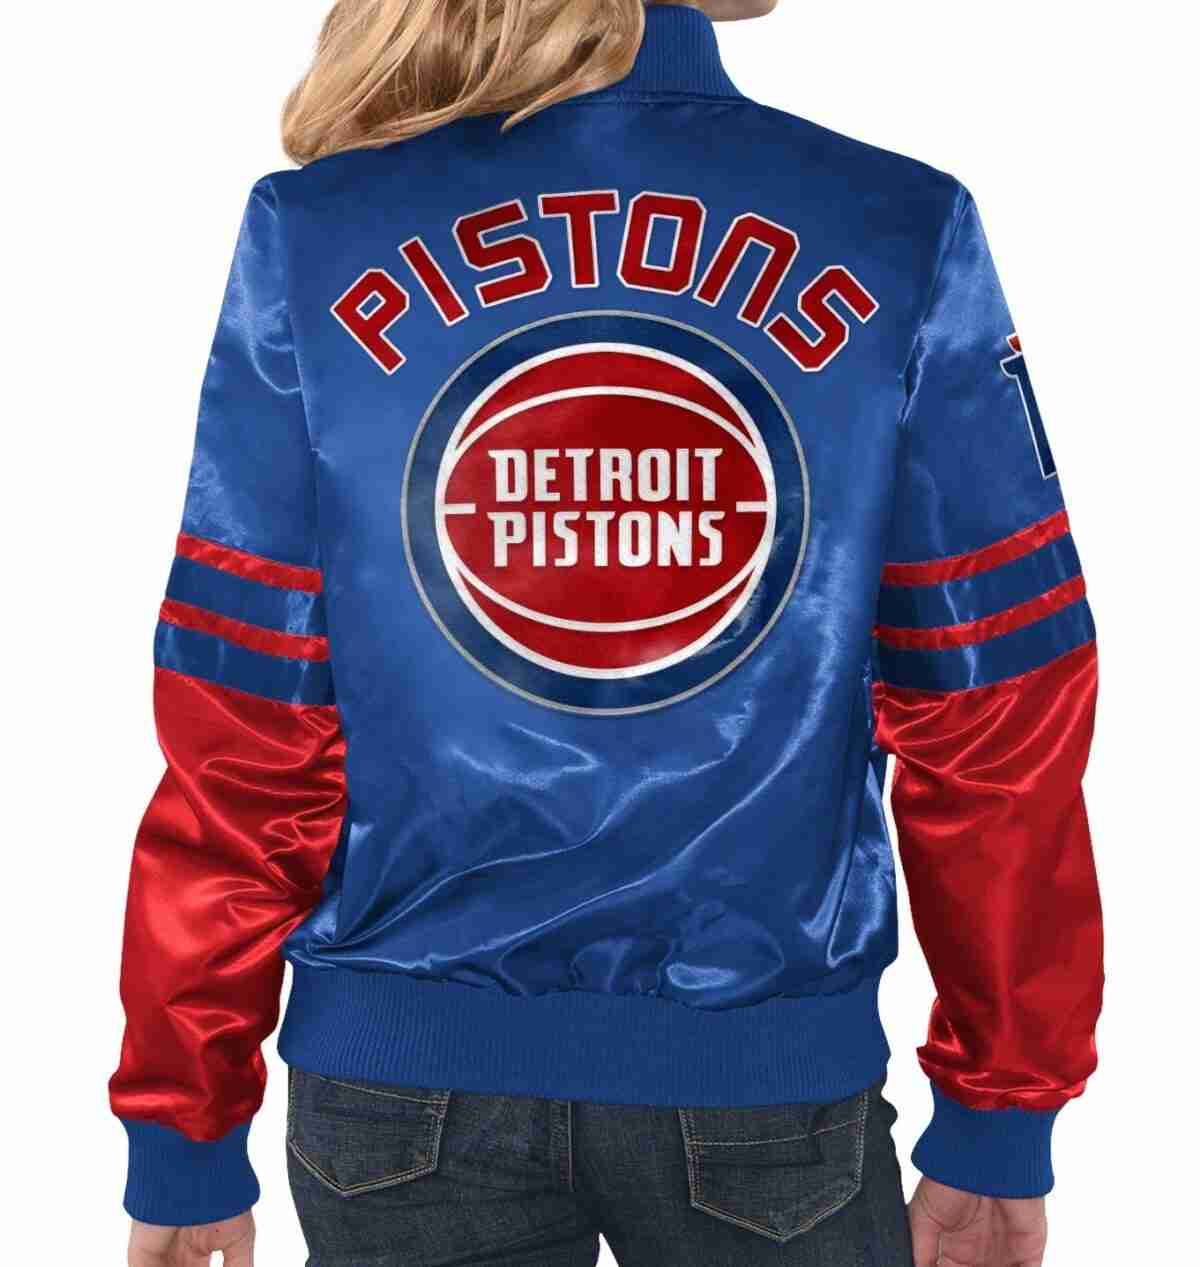 Official Ladies Starter Detroit Pistons Jacket